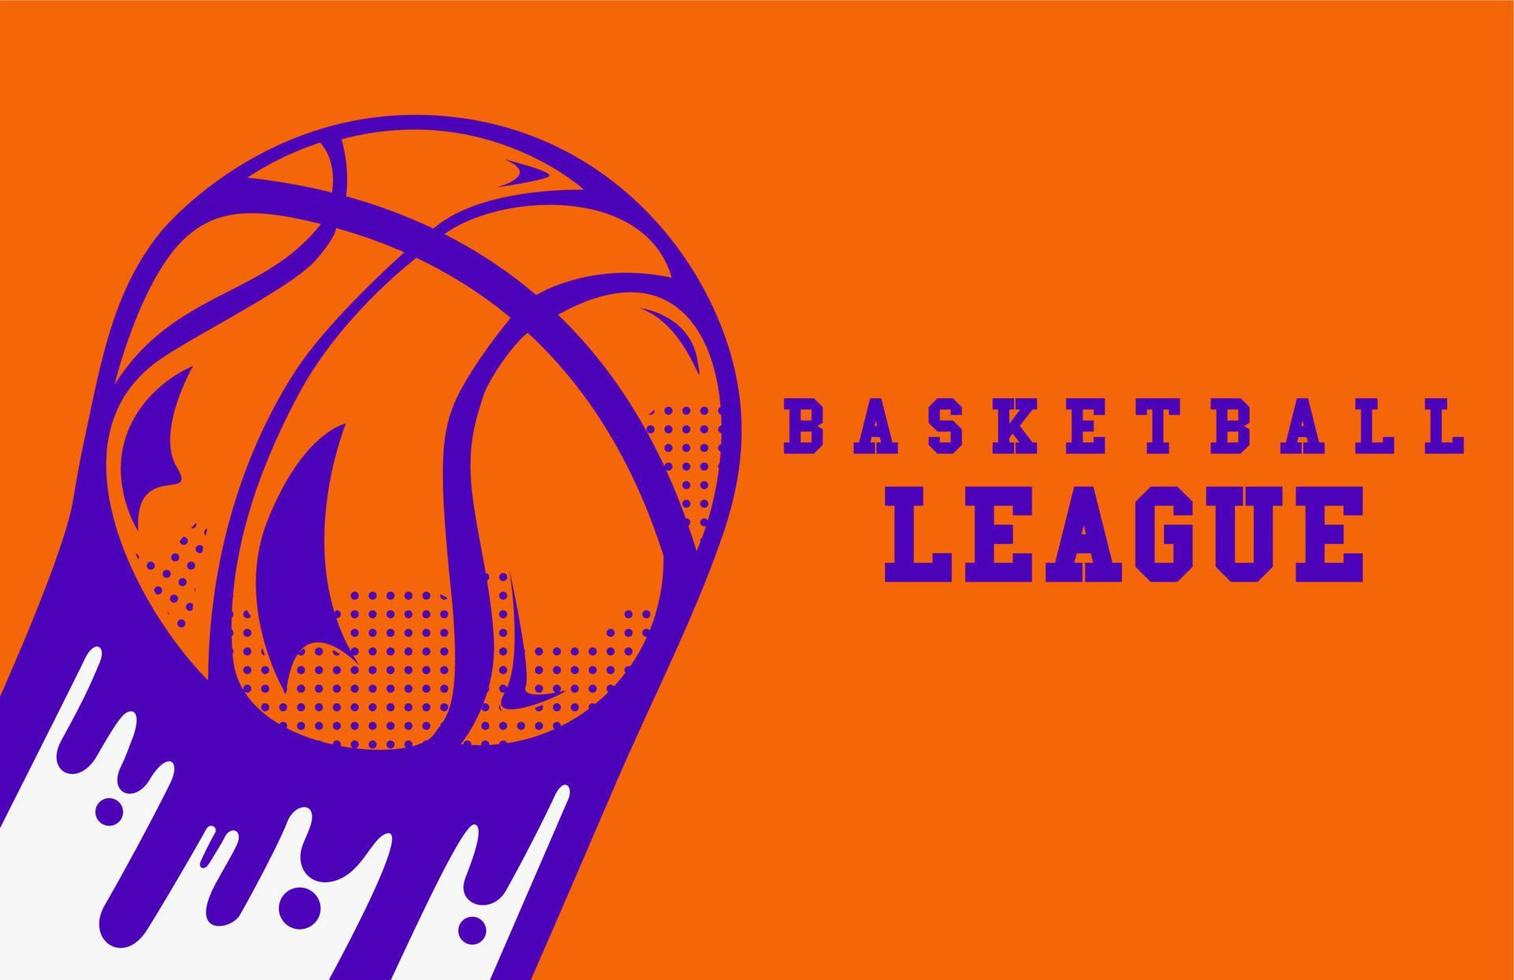 Modern Trendy Basketball League Background vector